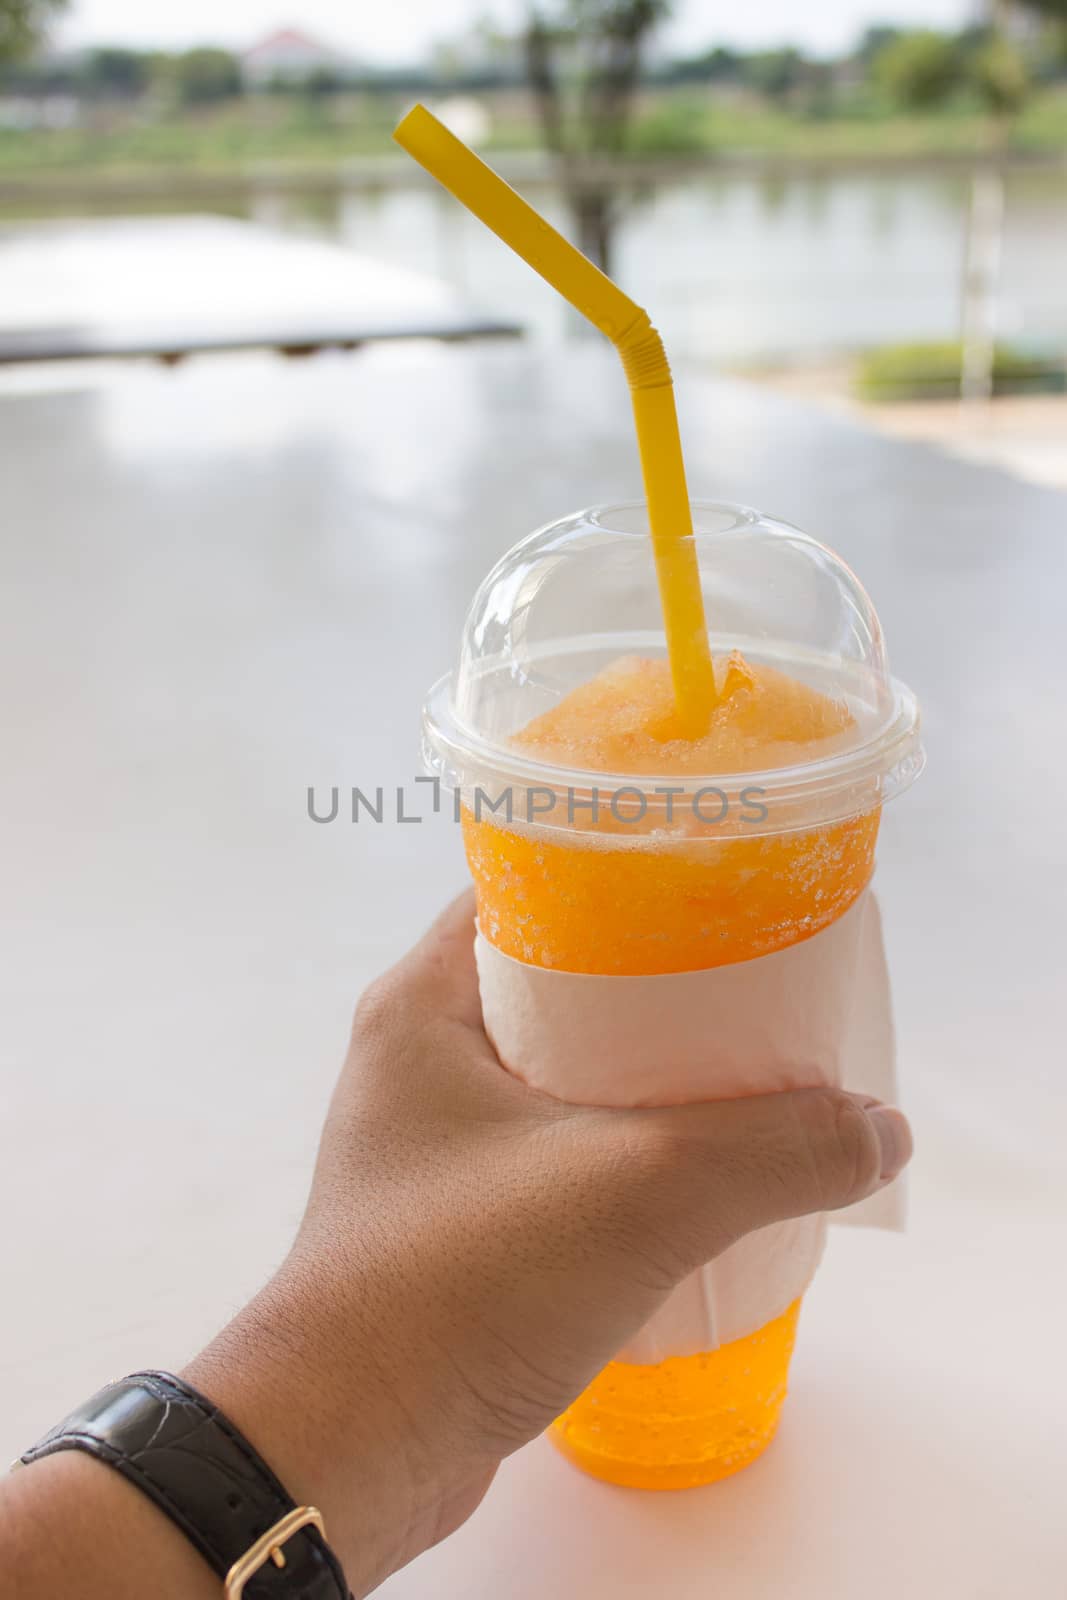 The cool orange juice